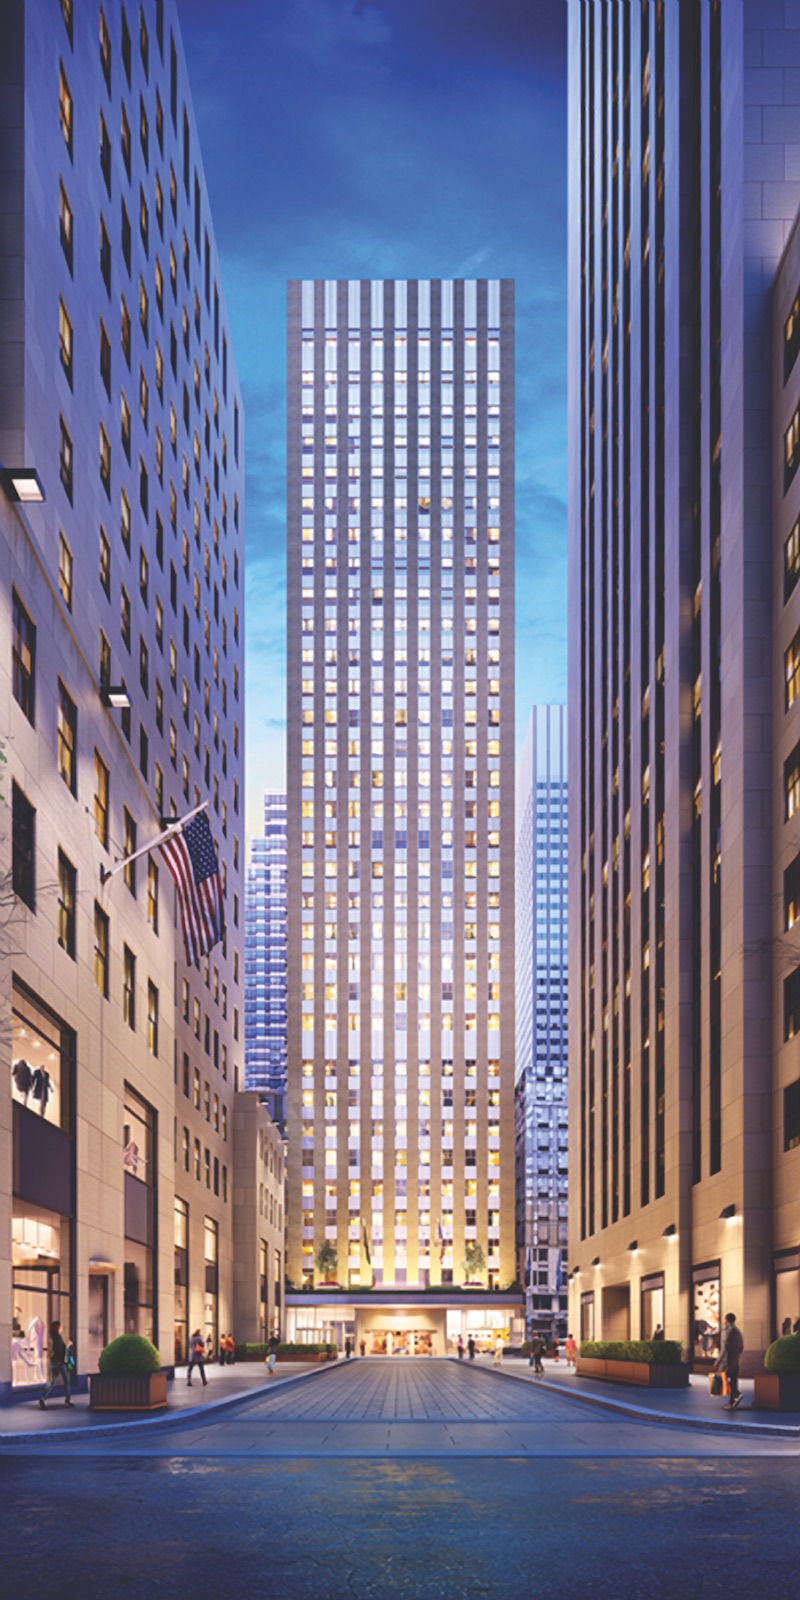 https://www.bdcnetwork.com/rockefeller-remake-iconic-new-york-tower-modernized-its-next-life